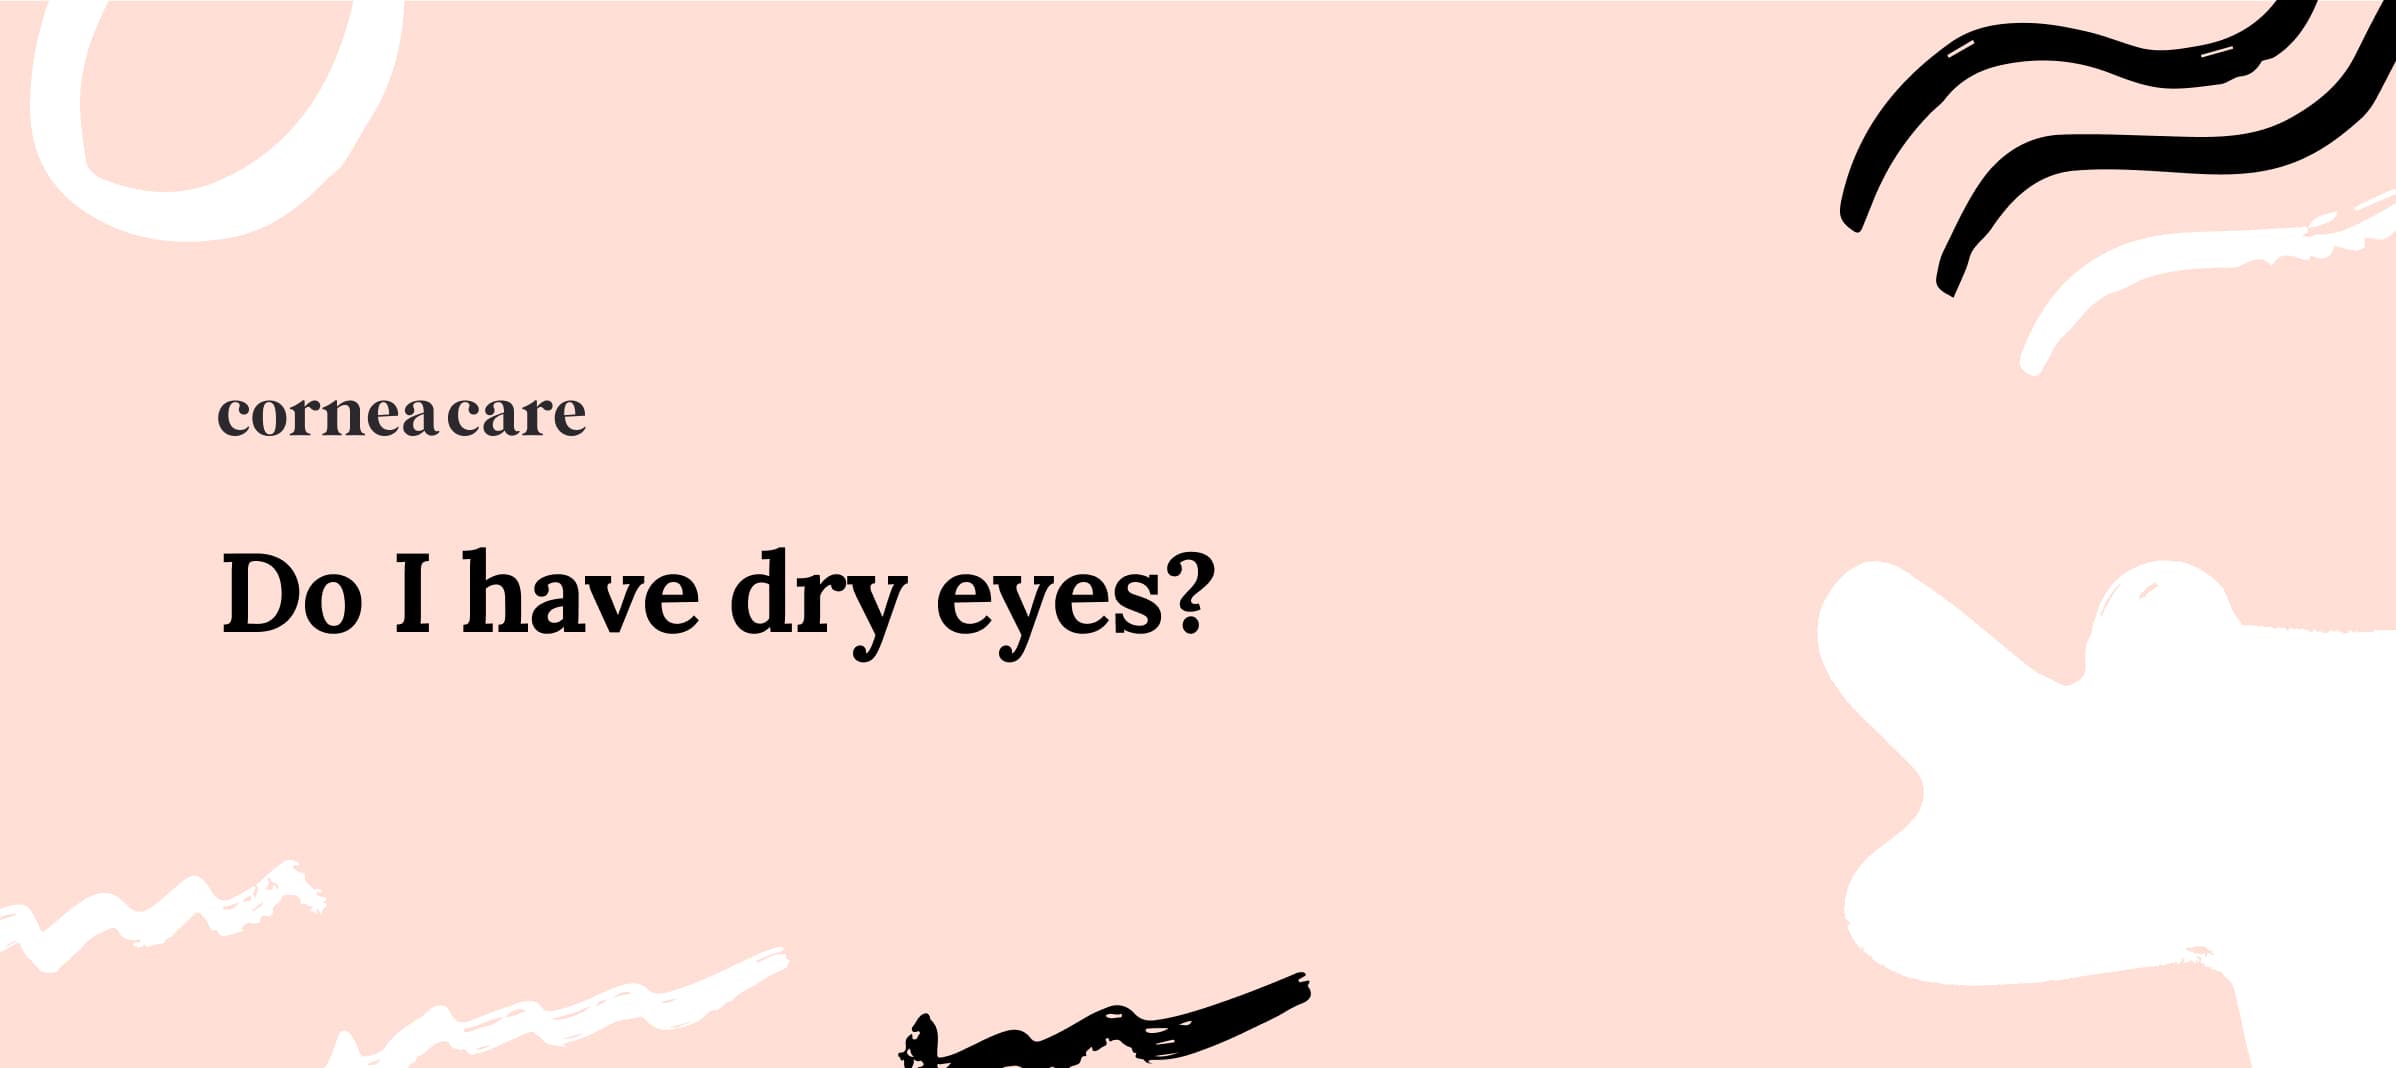 Do I have dry eyes?